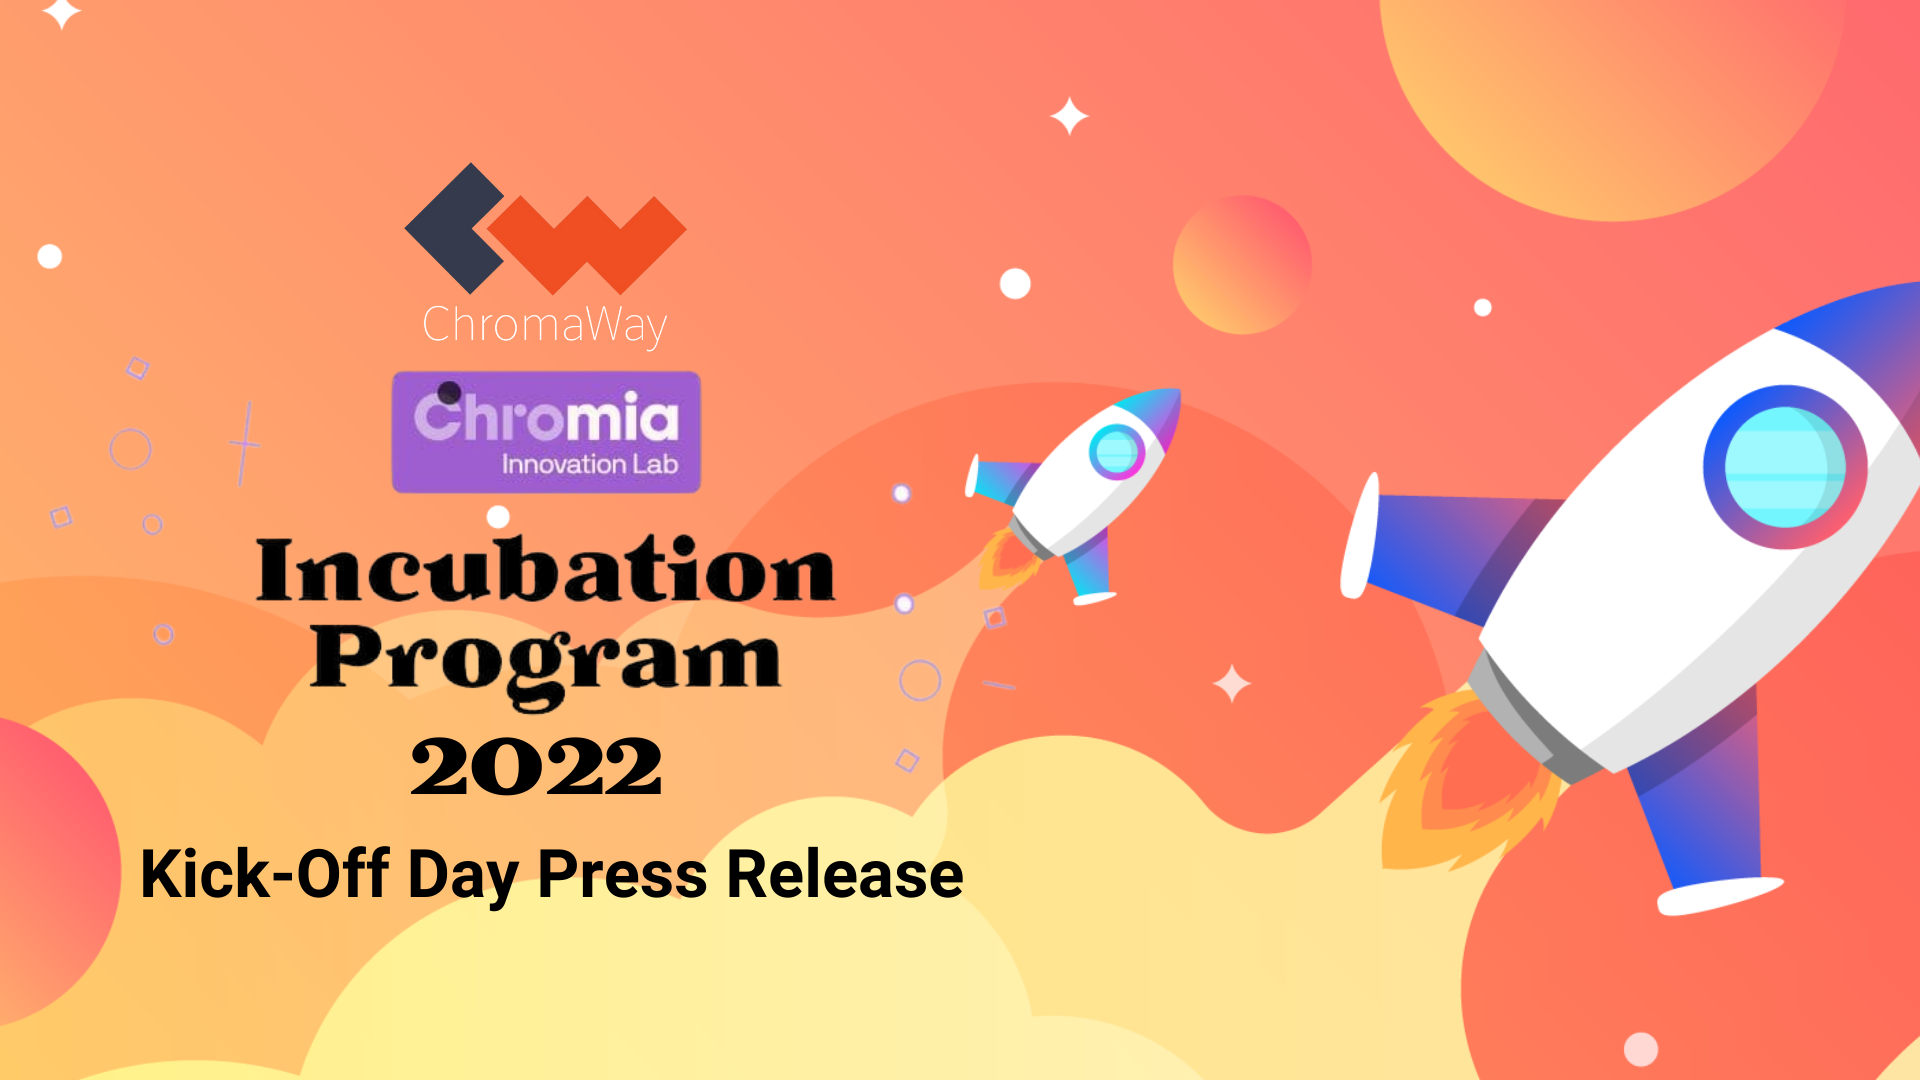 Incubation Program 2022 
Kick-Off Day Press Release